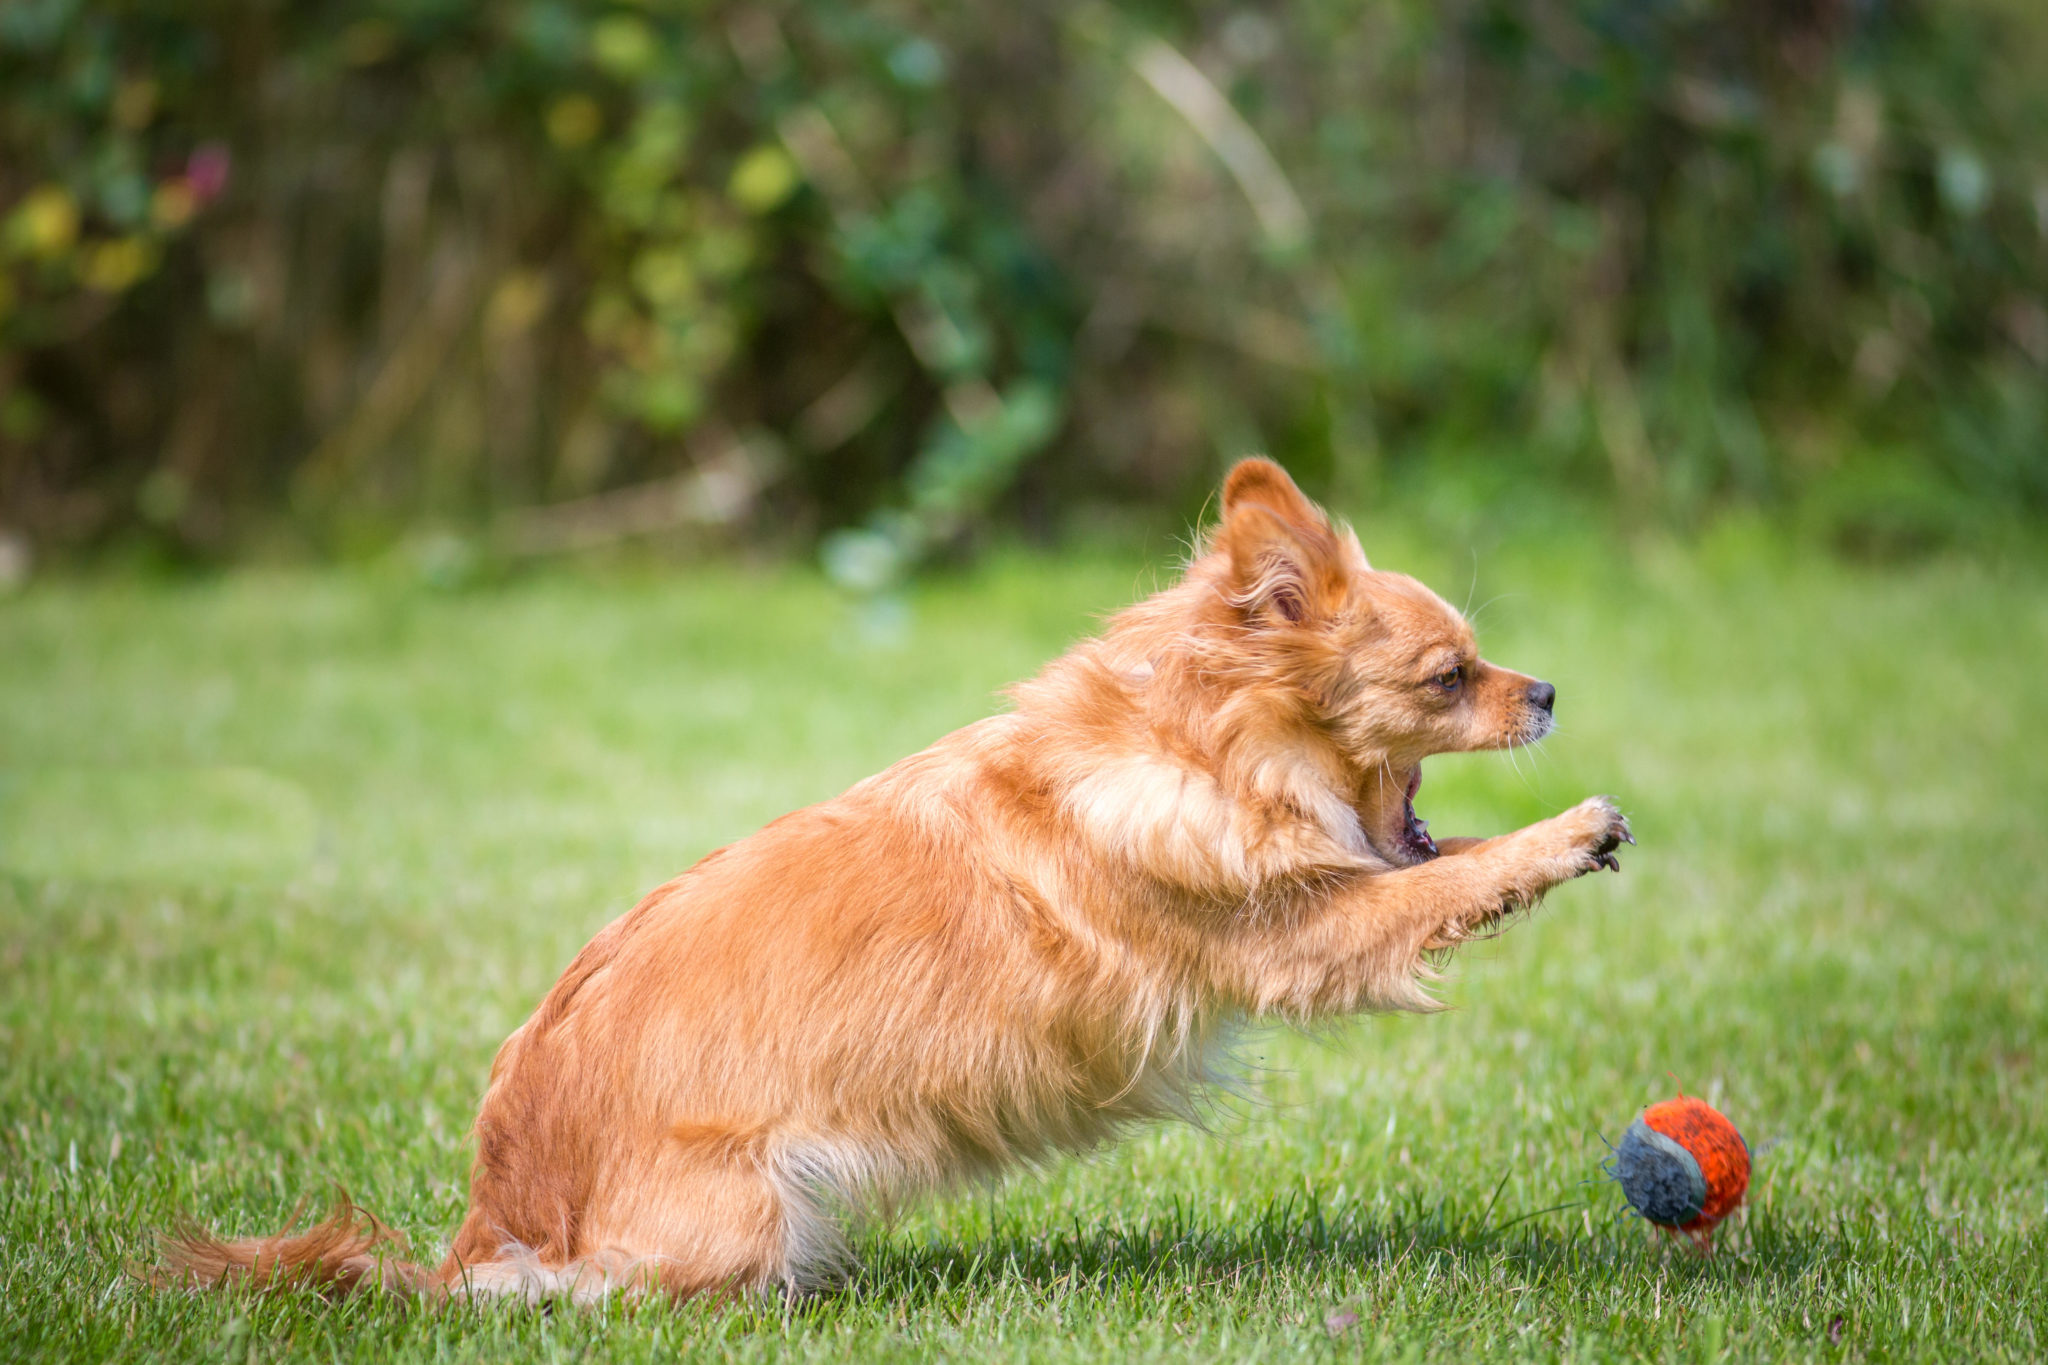 A dog attacks a tennis ball